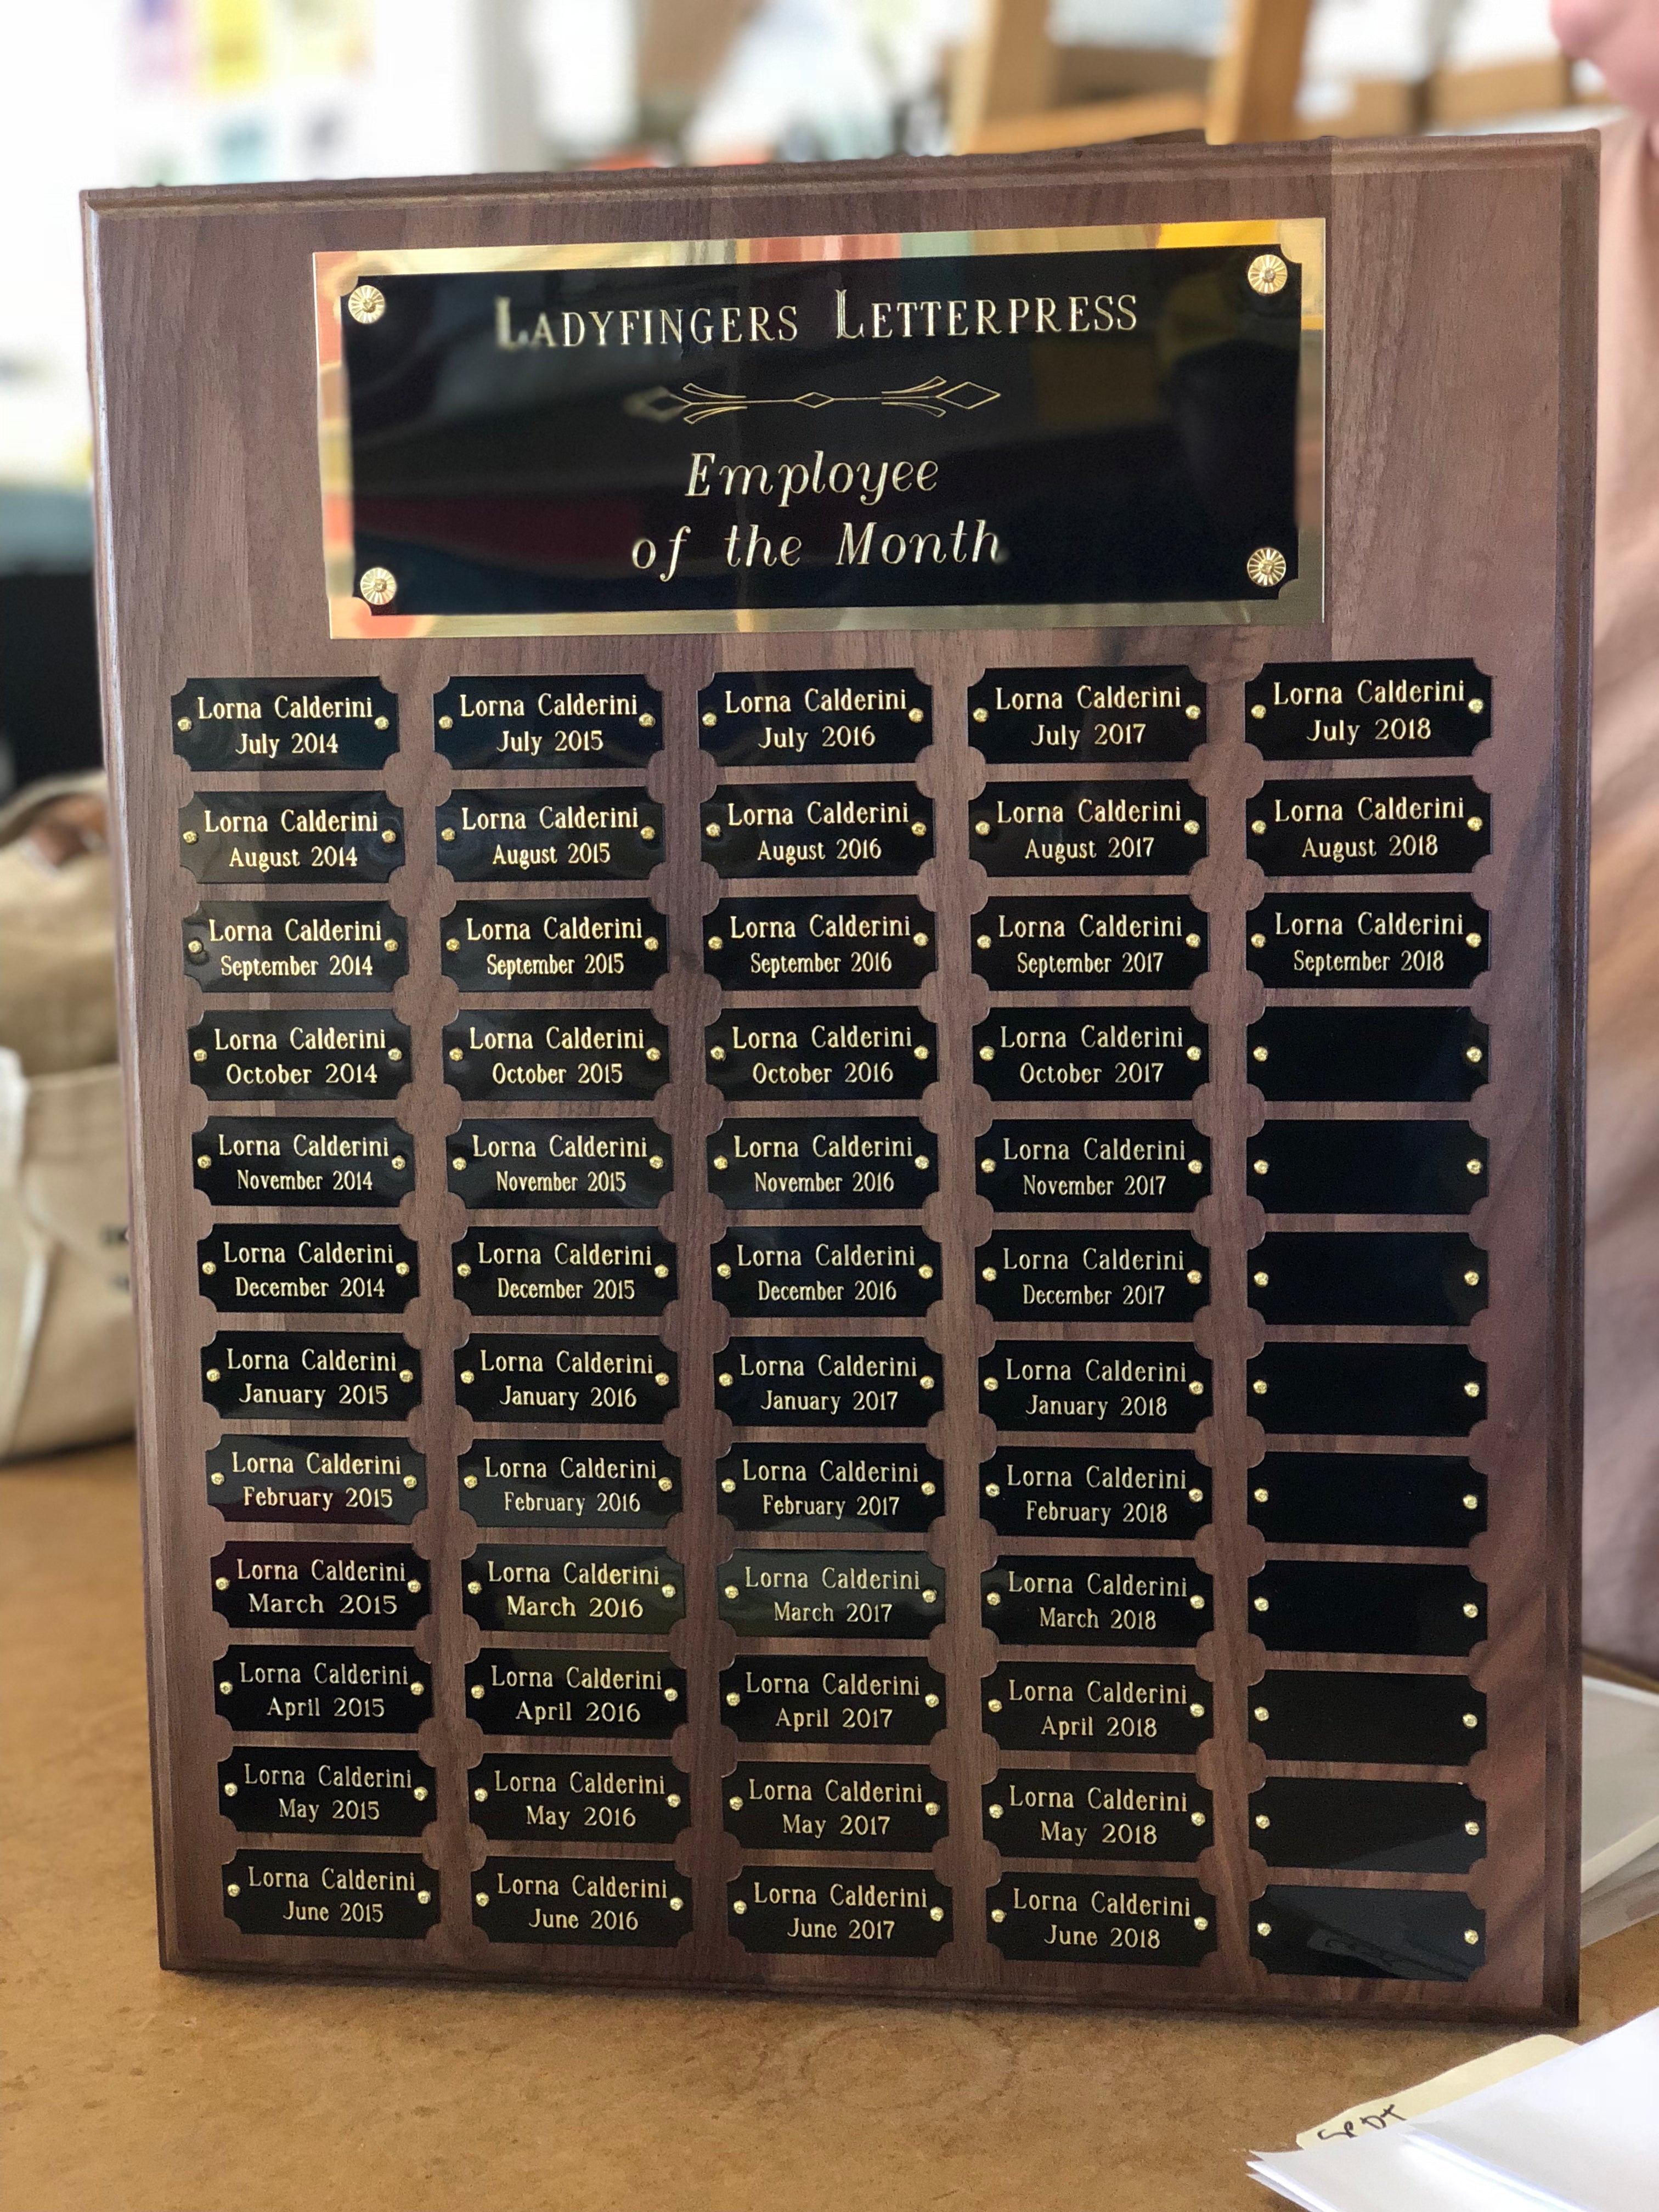 Ladyfingers Letterpress Employee of the Month